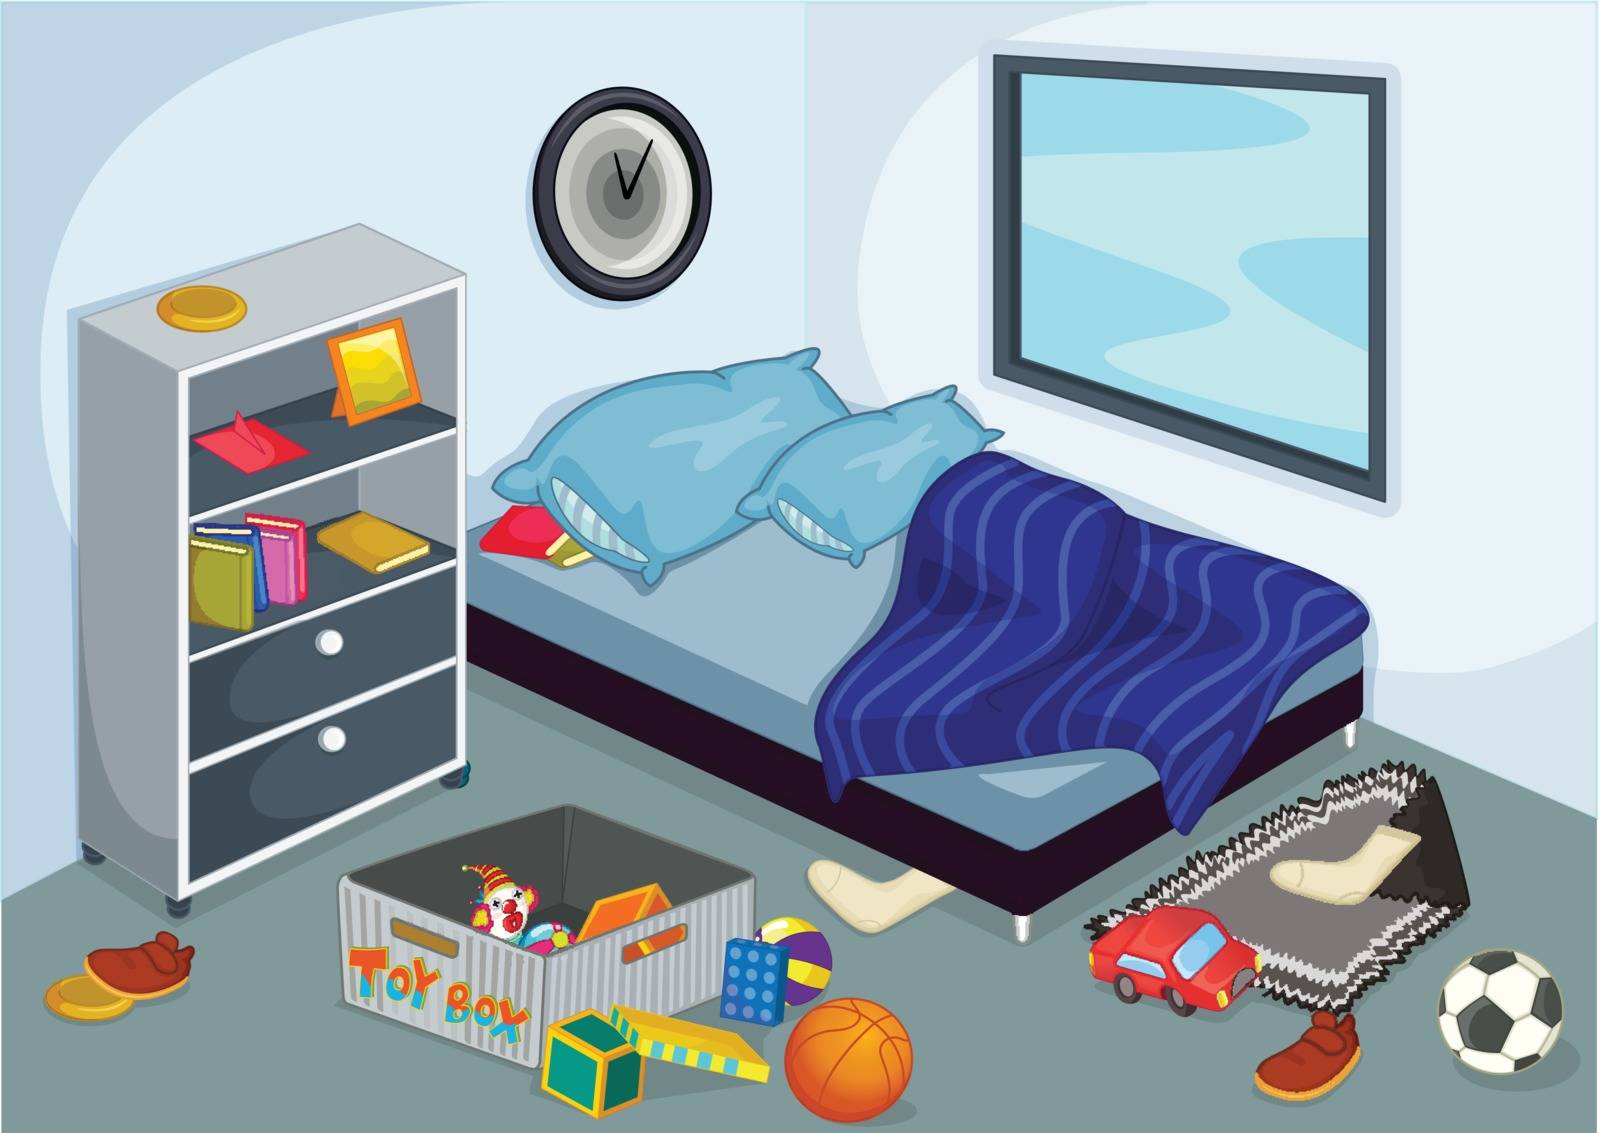 Illustration of a messy bedroom